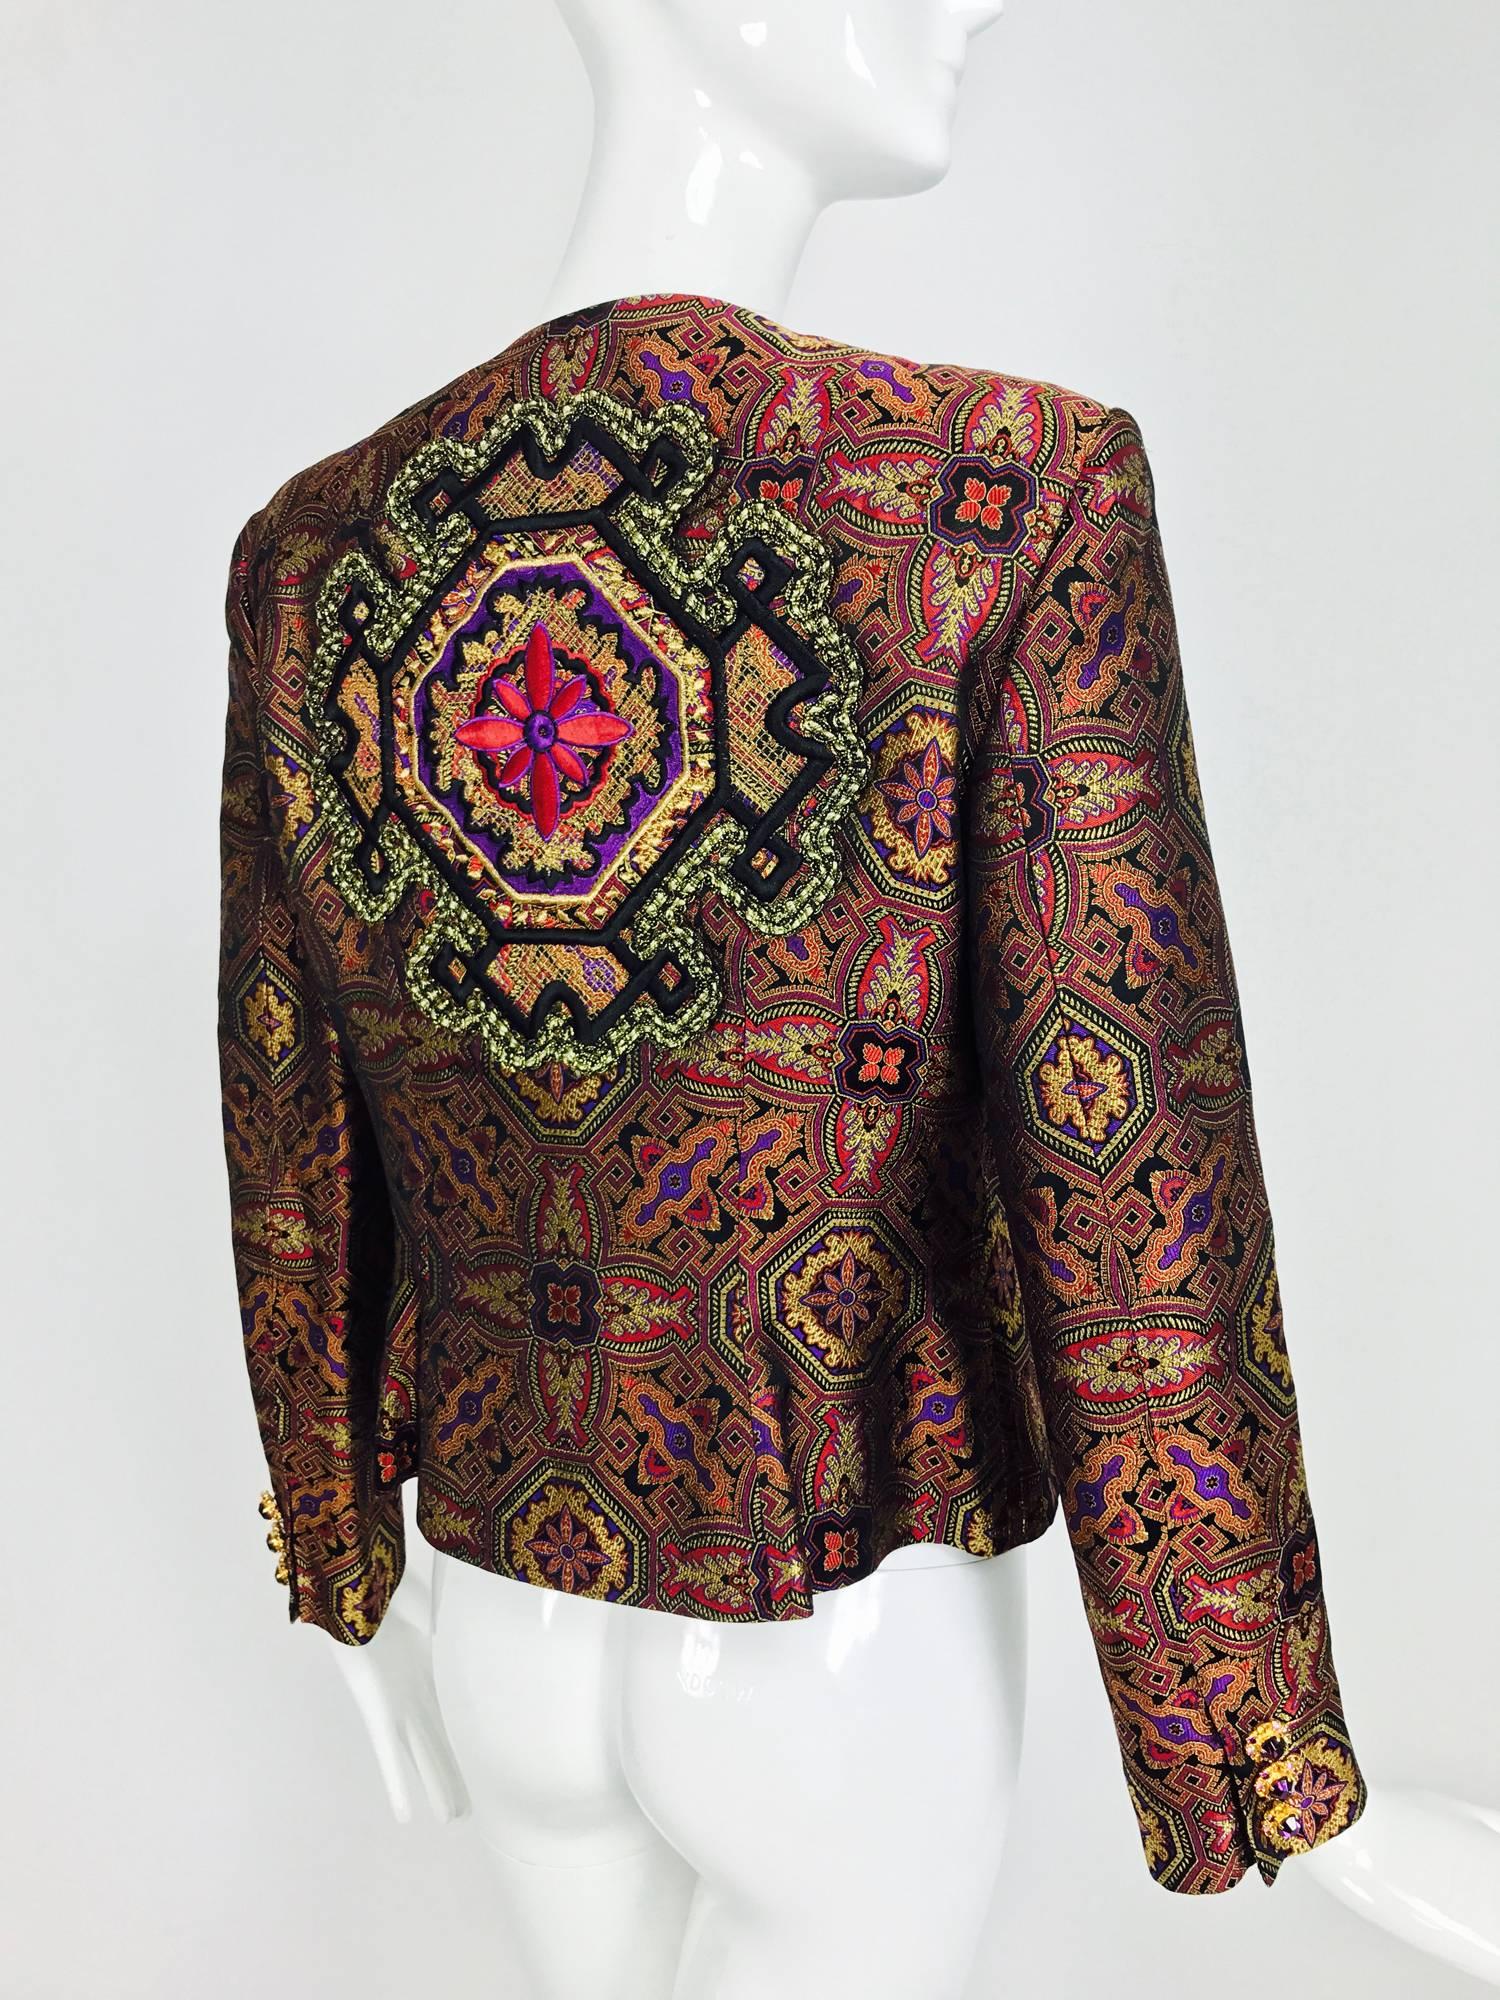 Black Vintage Christian LaCroix jewel tone brocade jacket jewel buttons 1980s